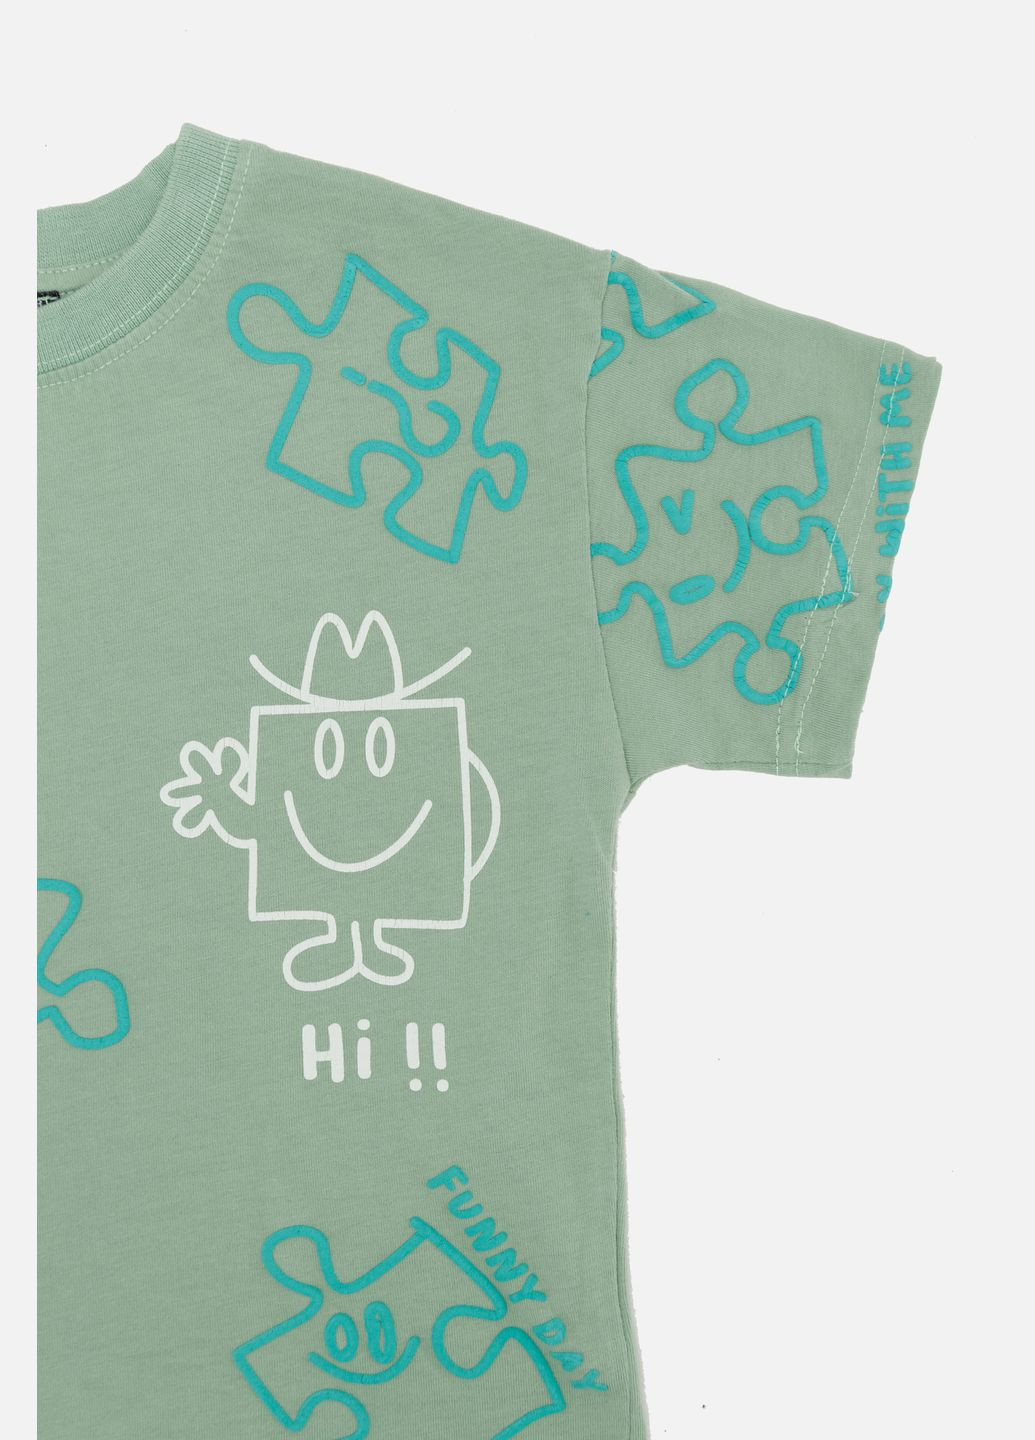 Оливковая летняя футболка с коротким рукавом для мальчика цвет оливковый цб-00246542 First Kids